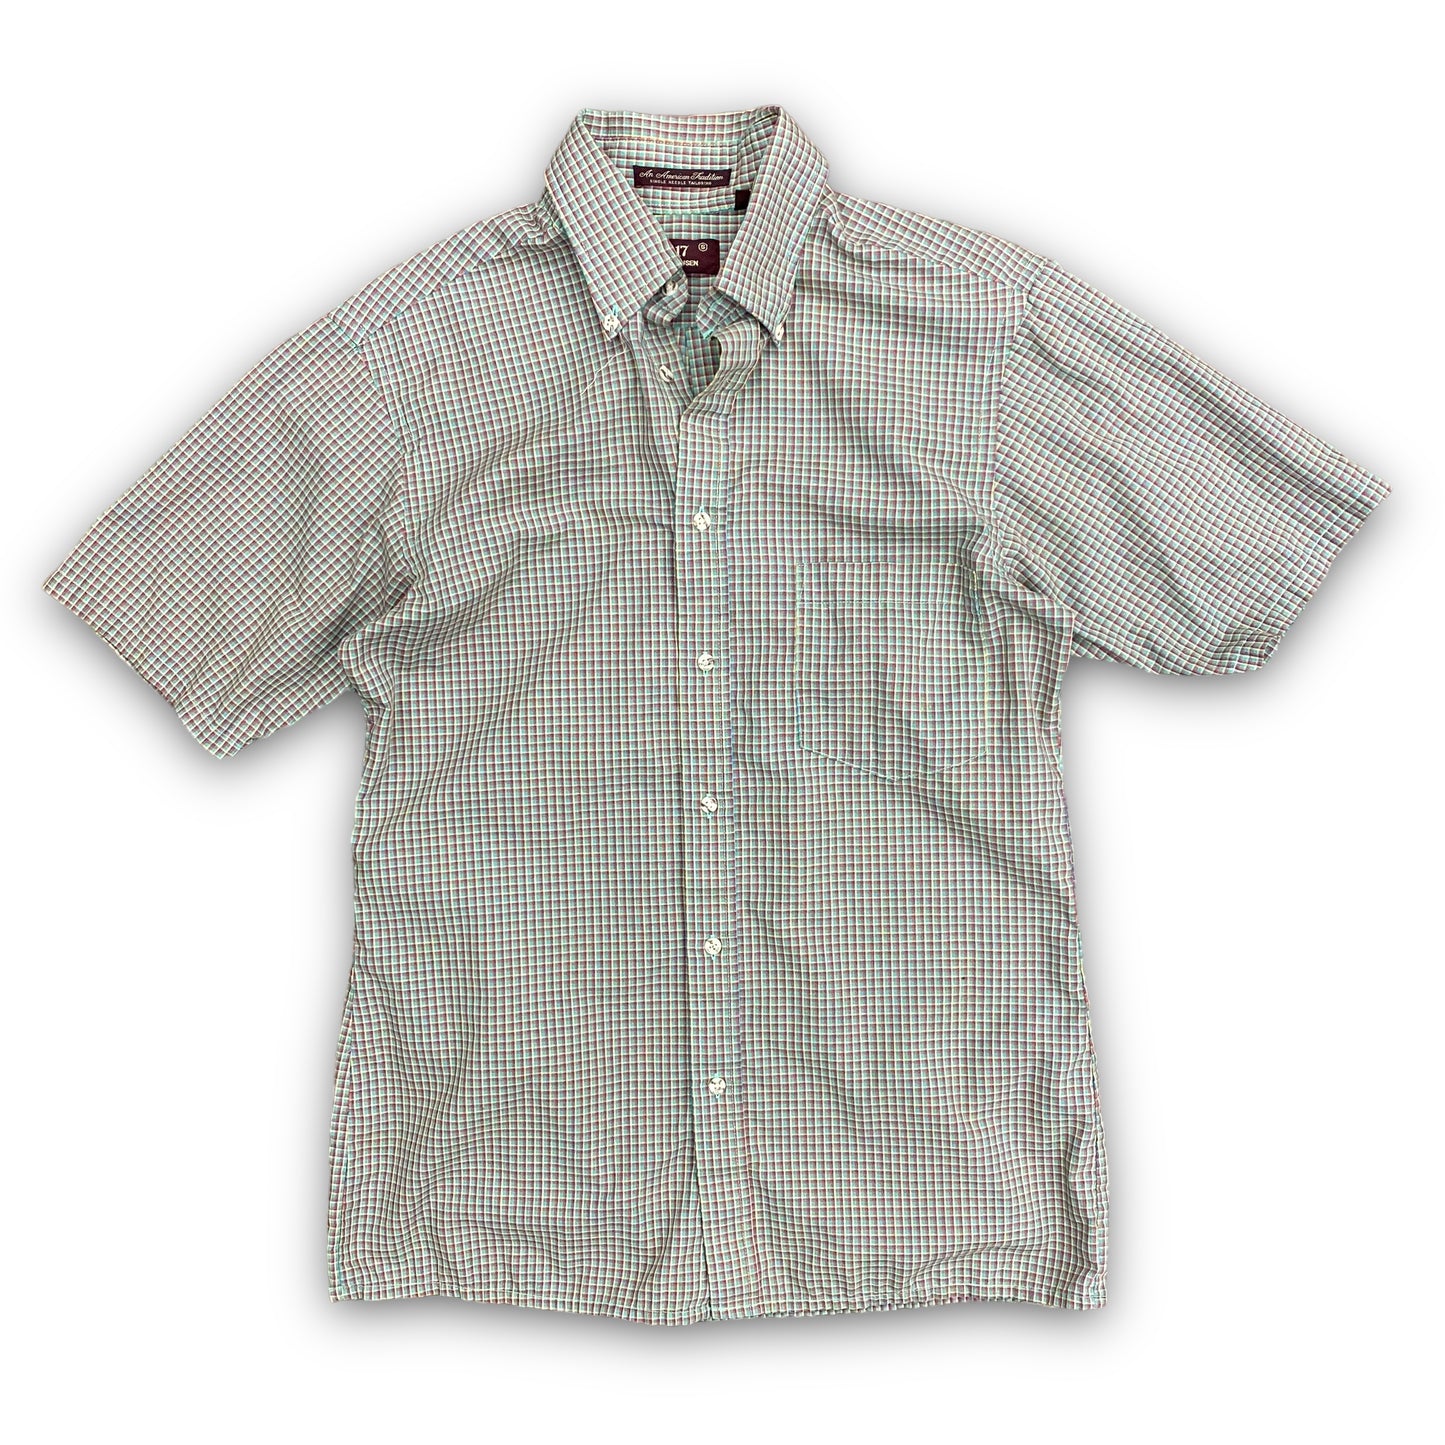 Vintage 1990s Van Heusen Short Sleeve Button Up - Size Small